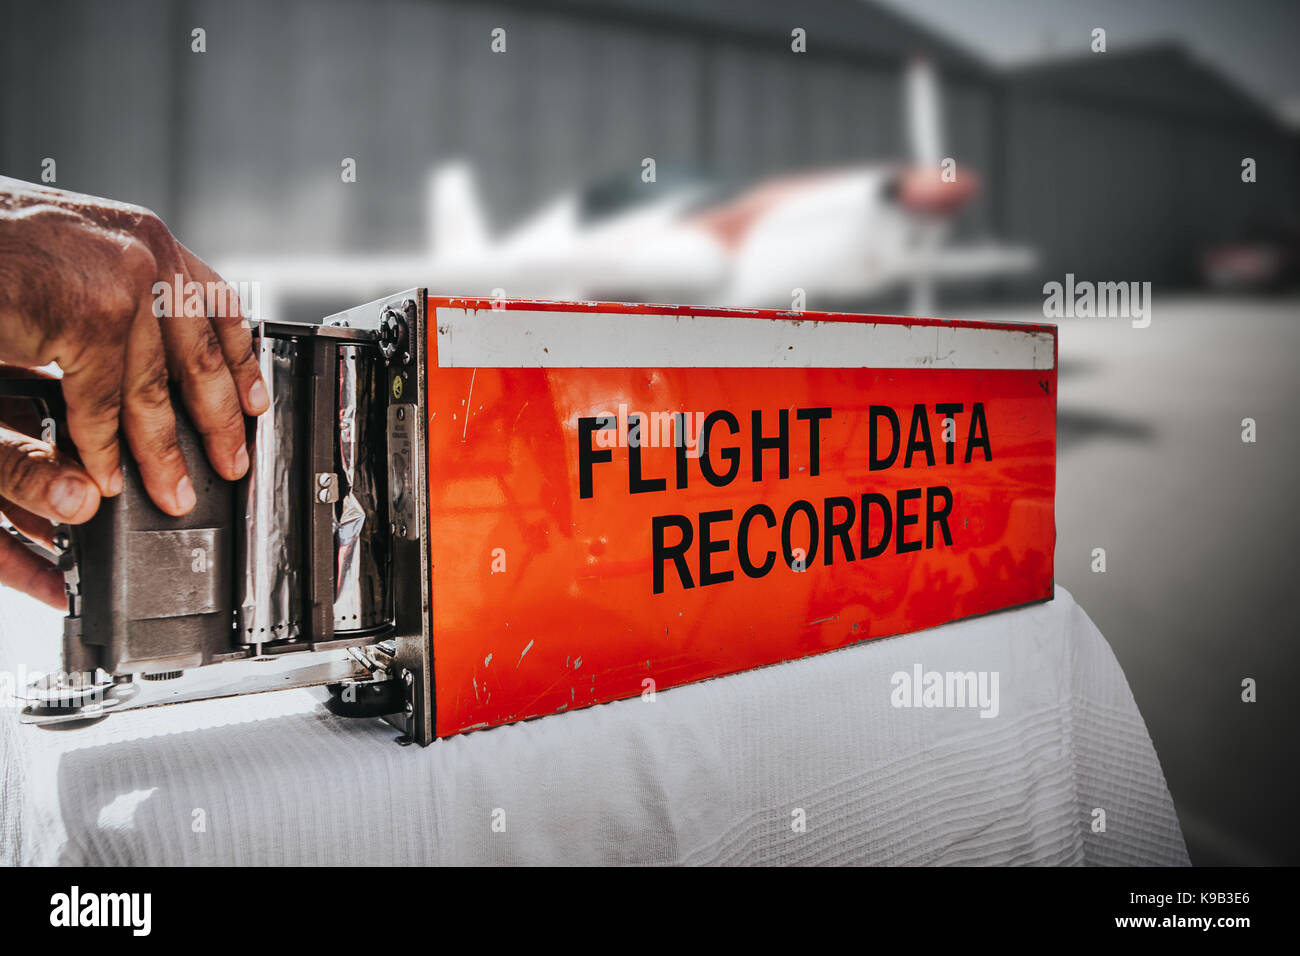 Flight data recorder Stock Photo